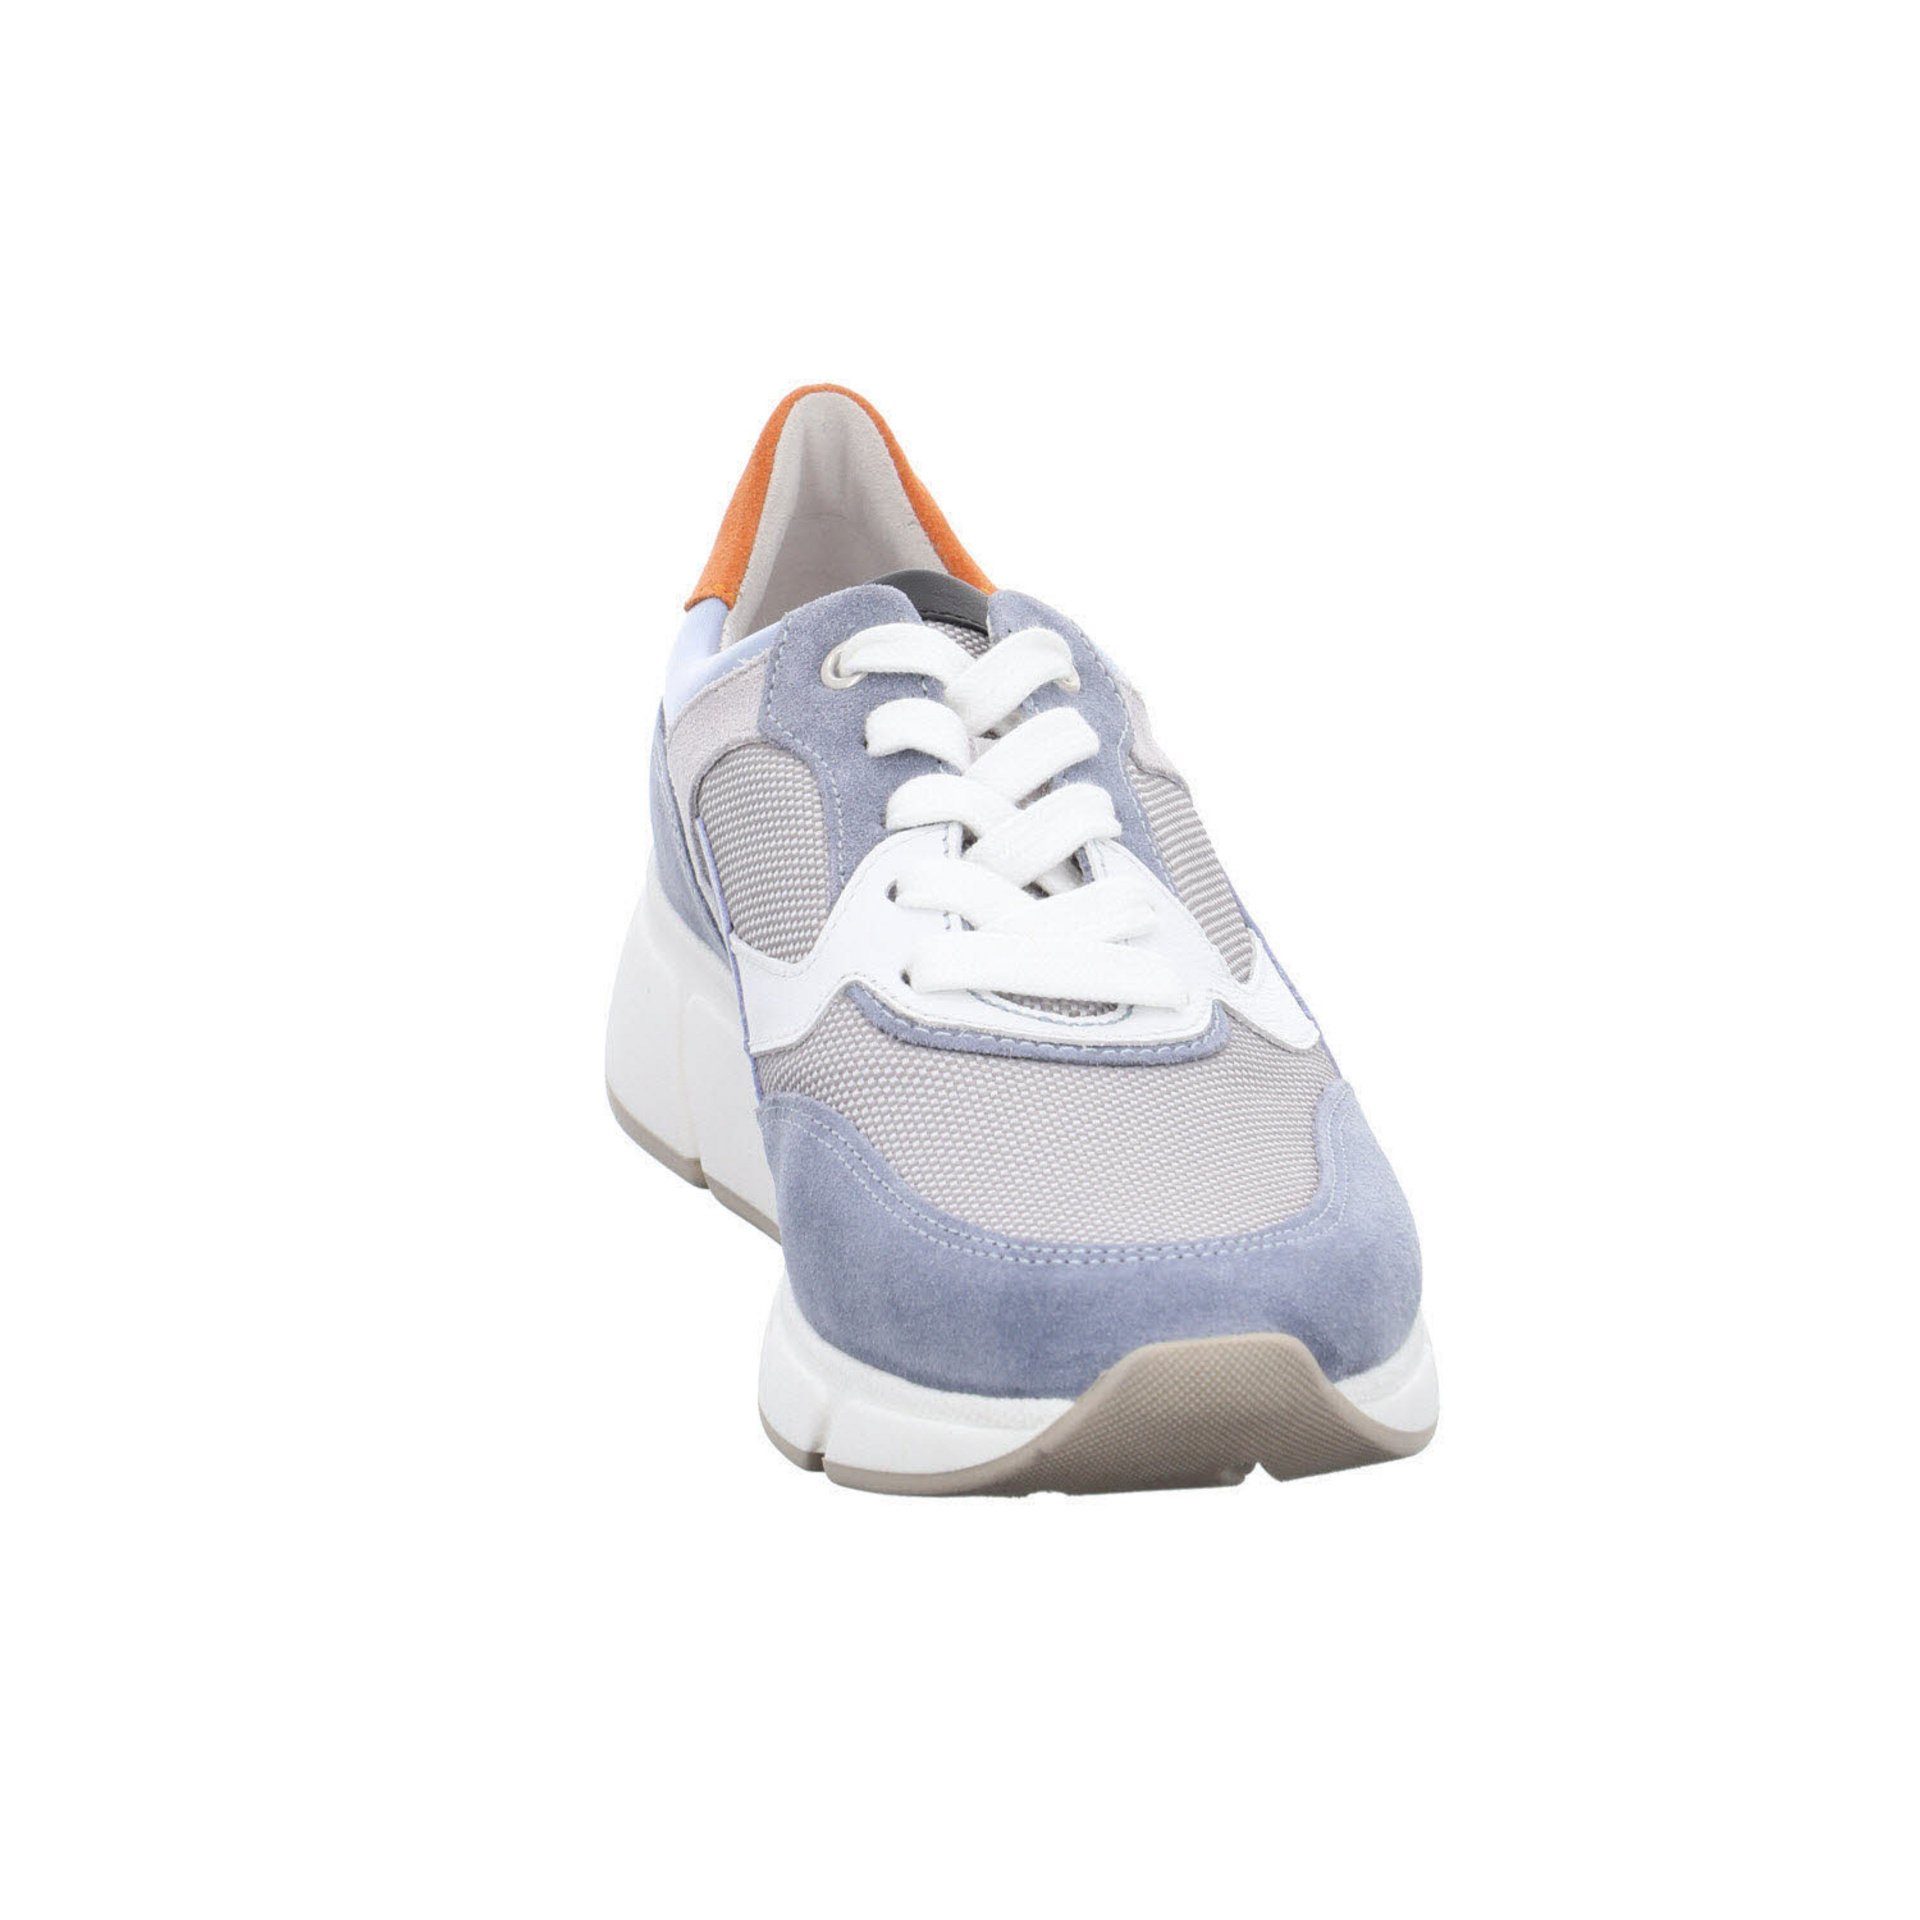 Sneaker Sneaker Gabor Damen cielo/grau/orange Florenz Sneaker Leder-/Textilkombination Schuhe